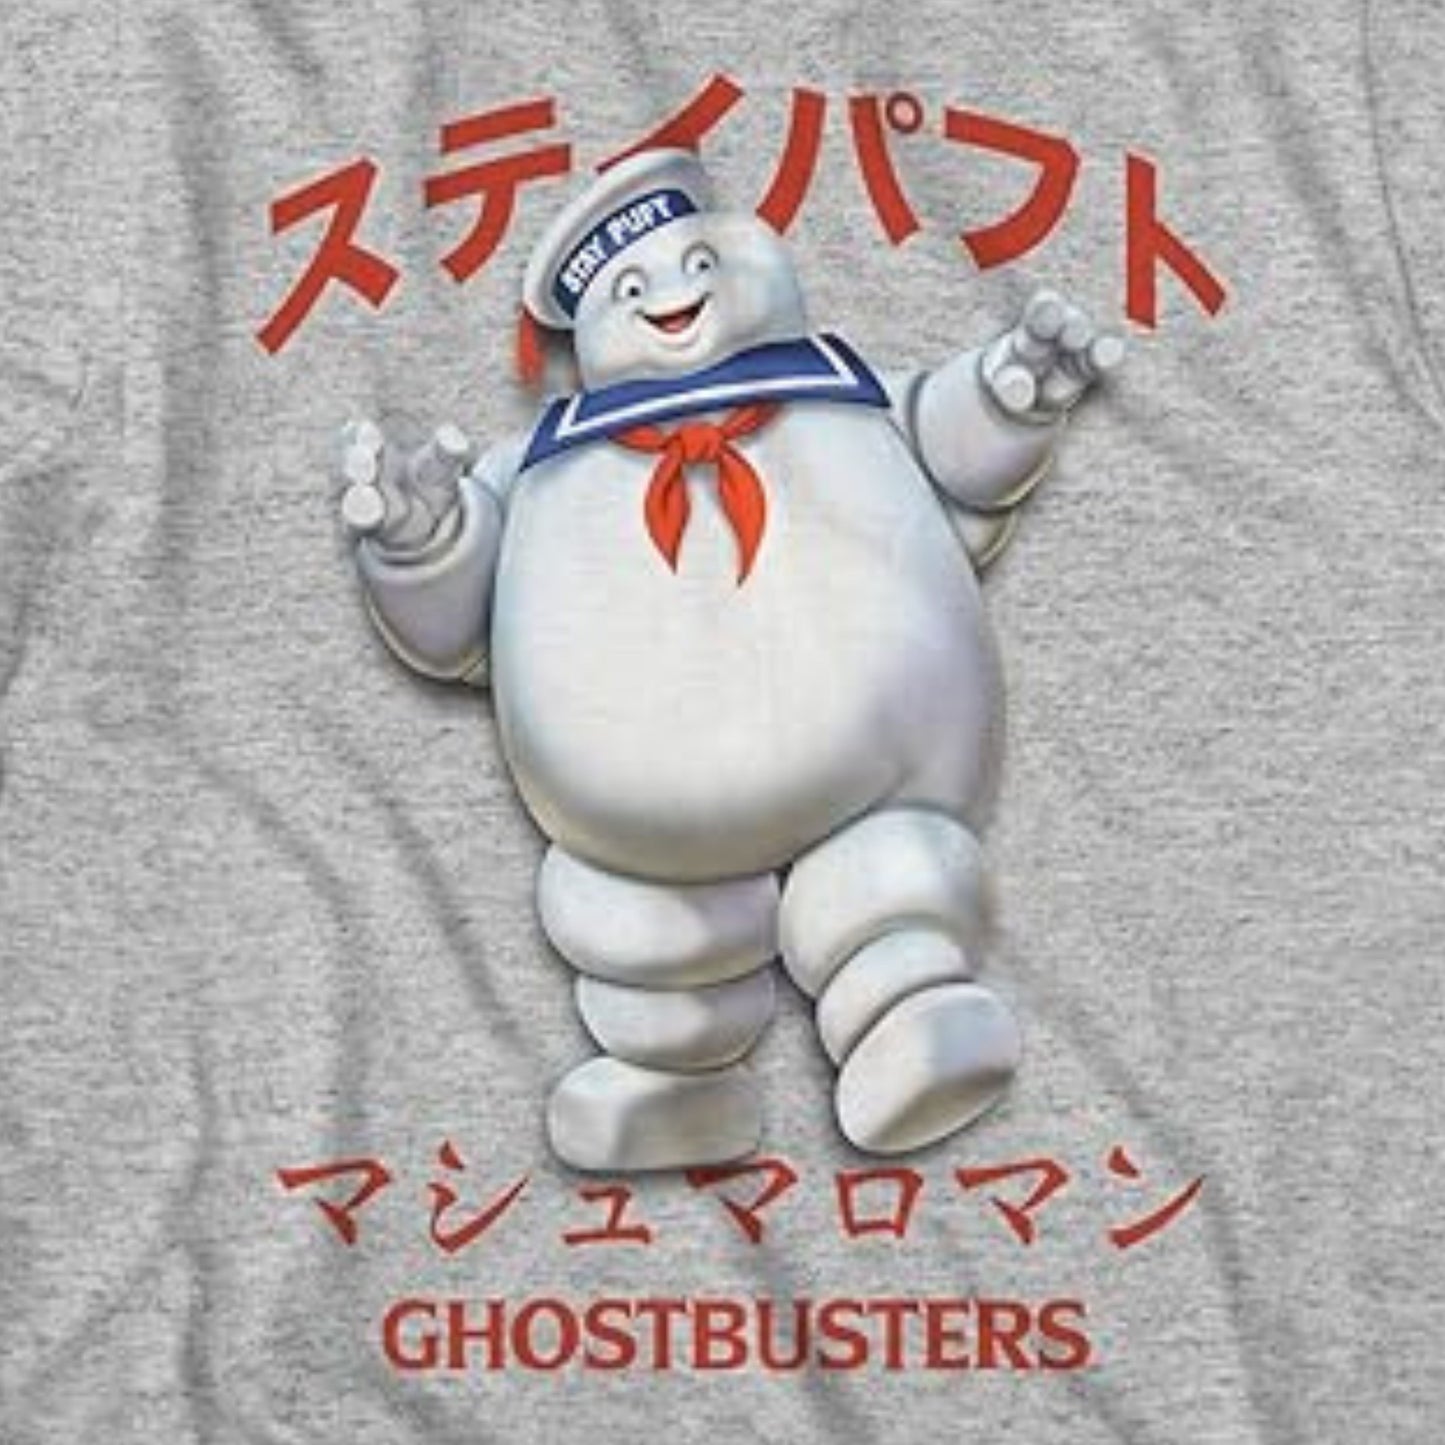 Men's Ghostbusters Short Sleeve Crewneck T-Shirt - Adult Sizes S-3XL